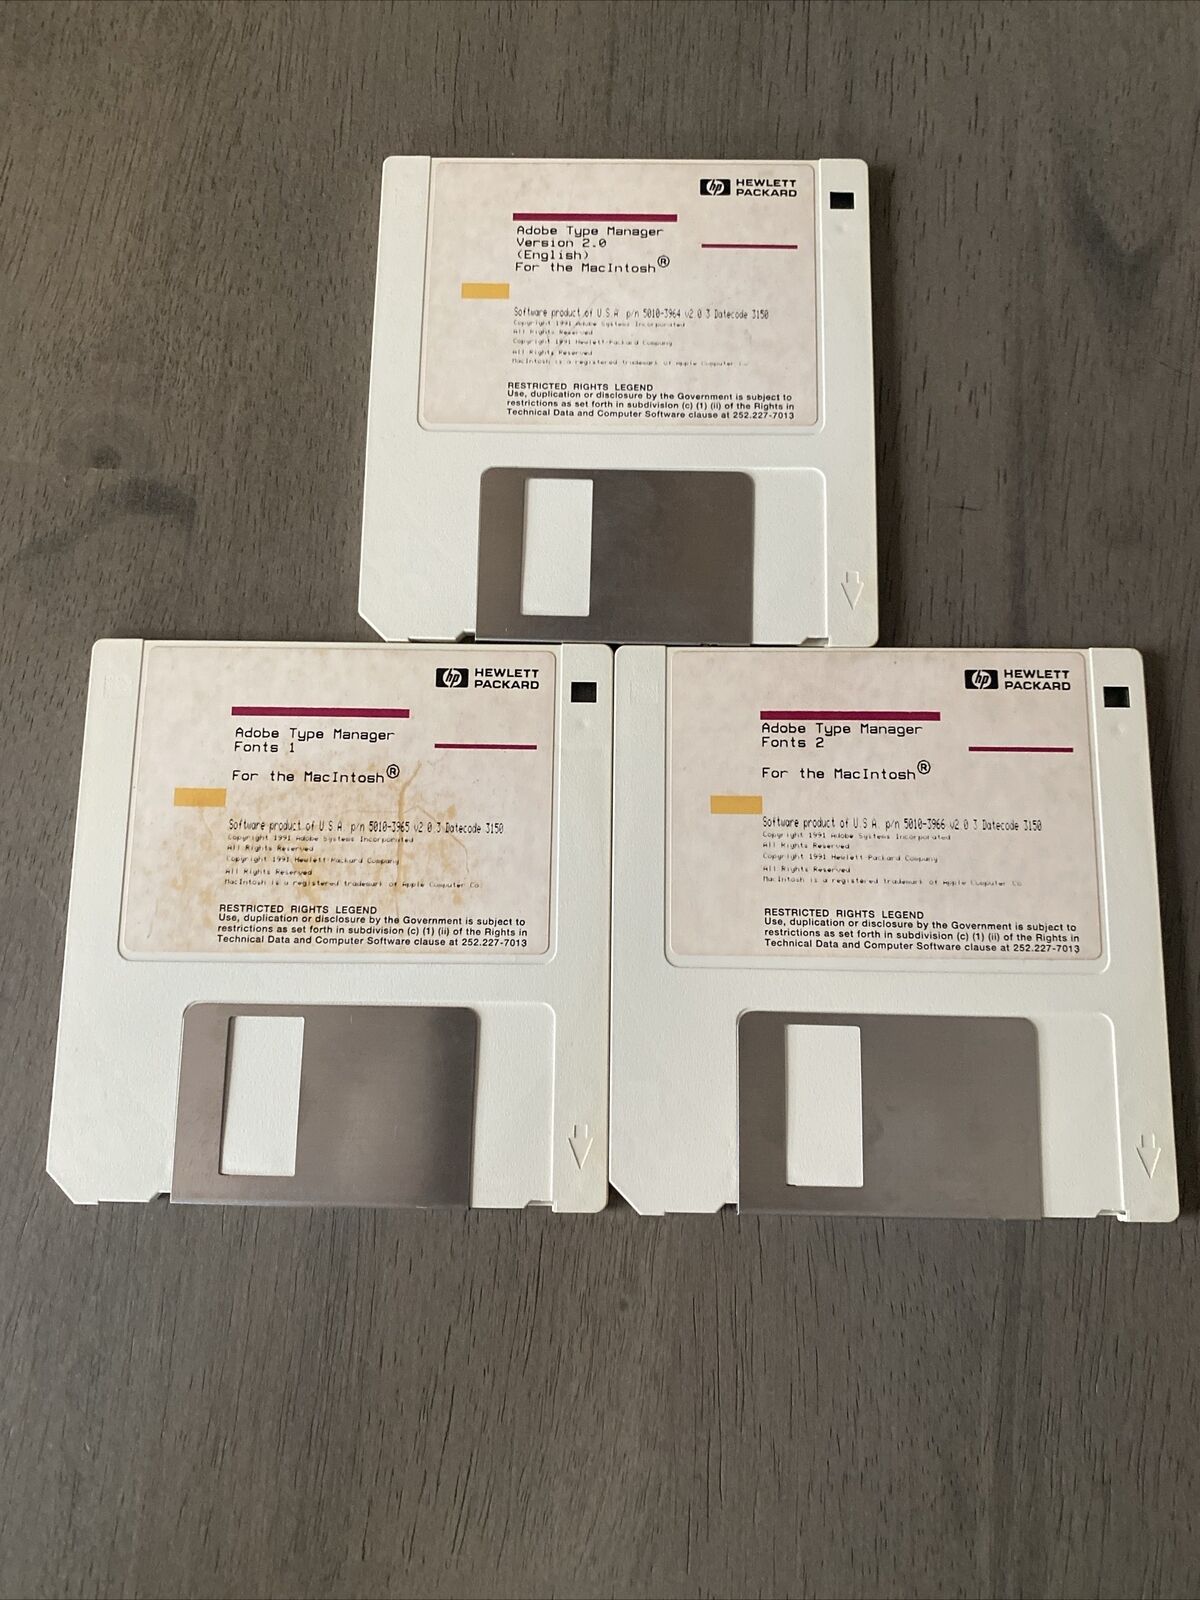 Junk Drawer Vintage 1991 Adobe Type Manager Floppy Disk Lot of 3 - For Apple Mac